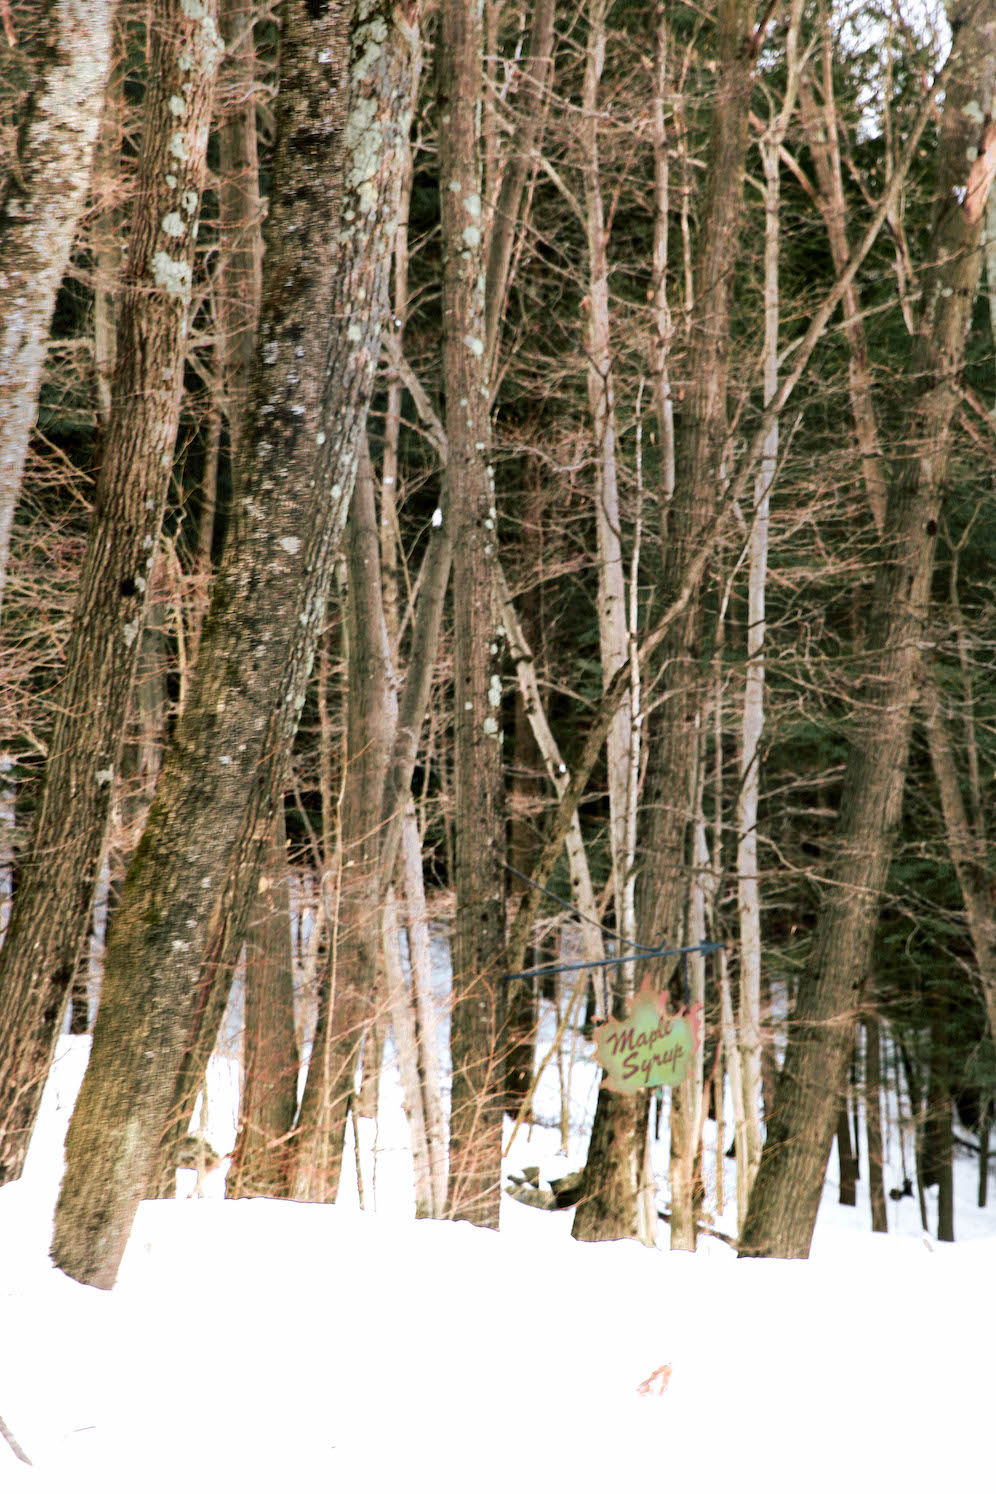 Explore Maple Season in Woodstock Vermont The Coastal Confidence Aubrey Yandow